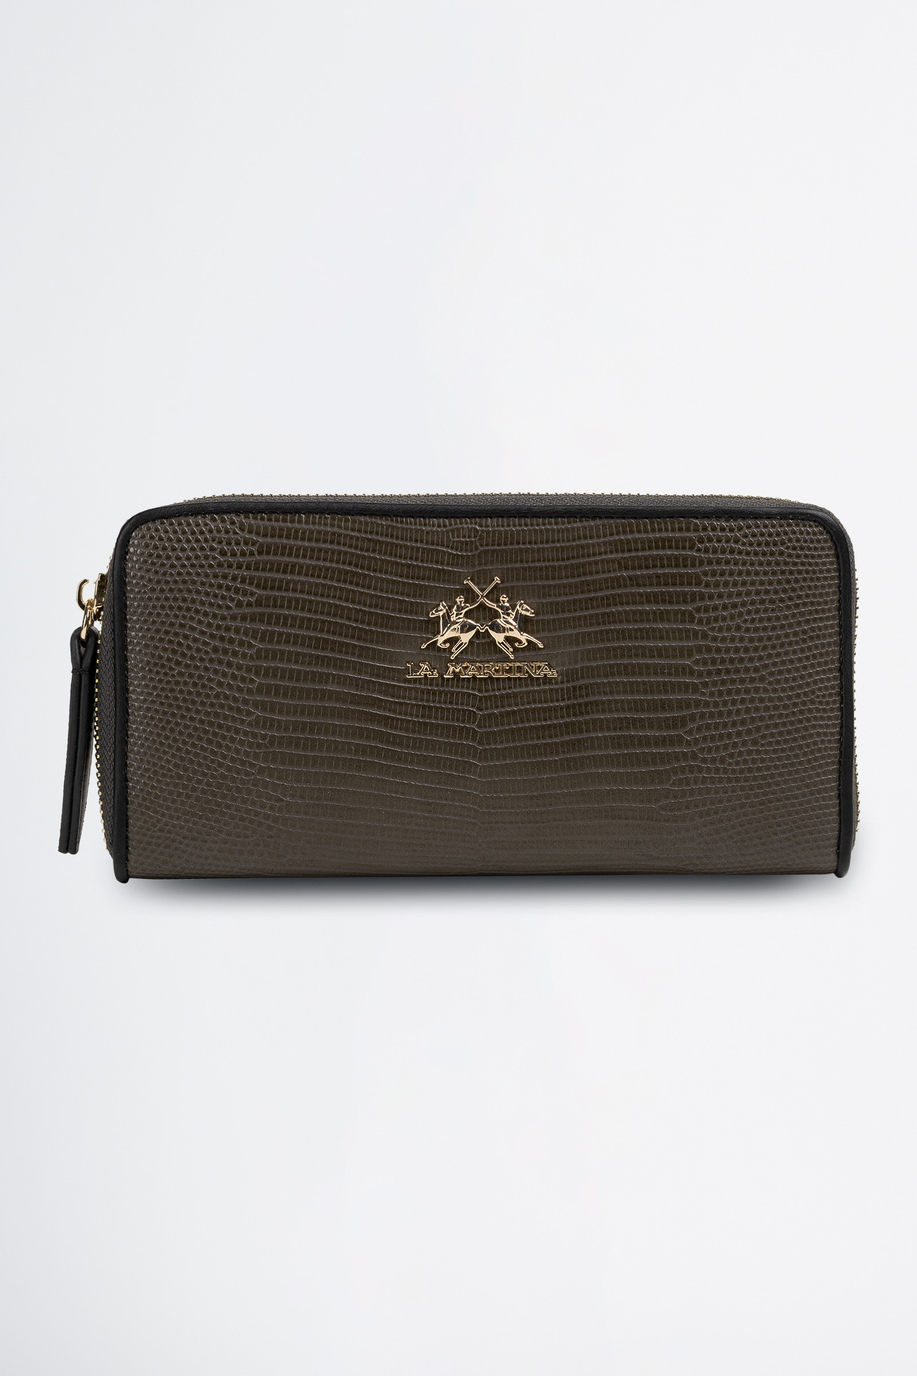 Leather wallet - Accessories Woman | La Martina - Official Online Shop